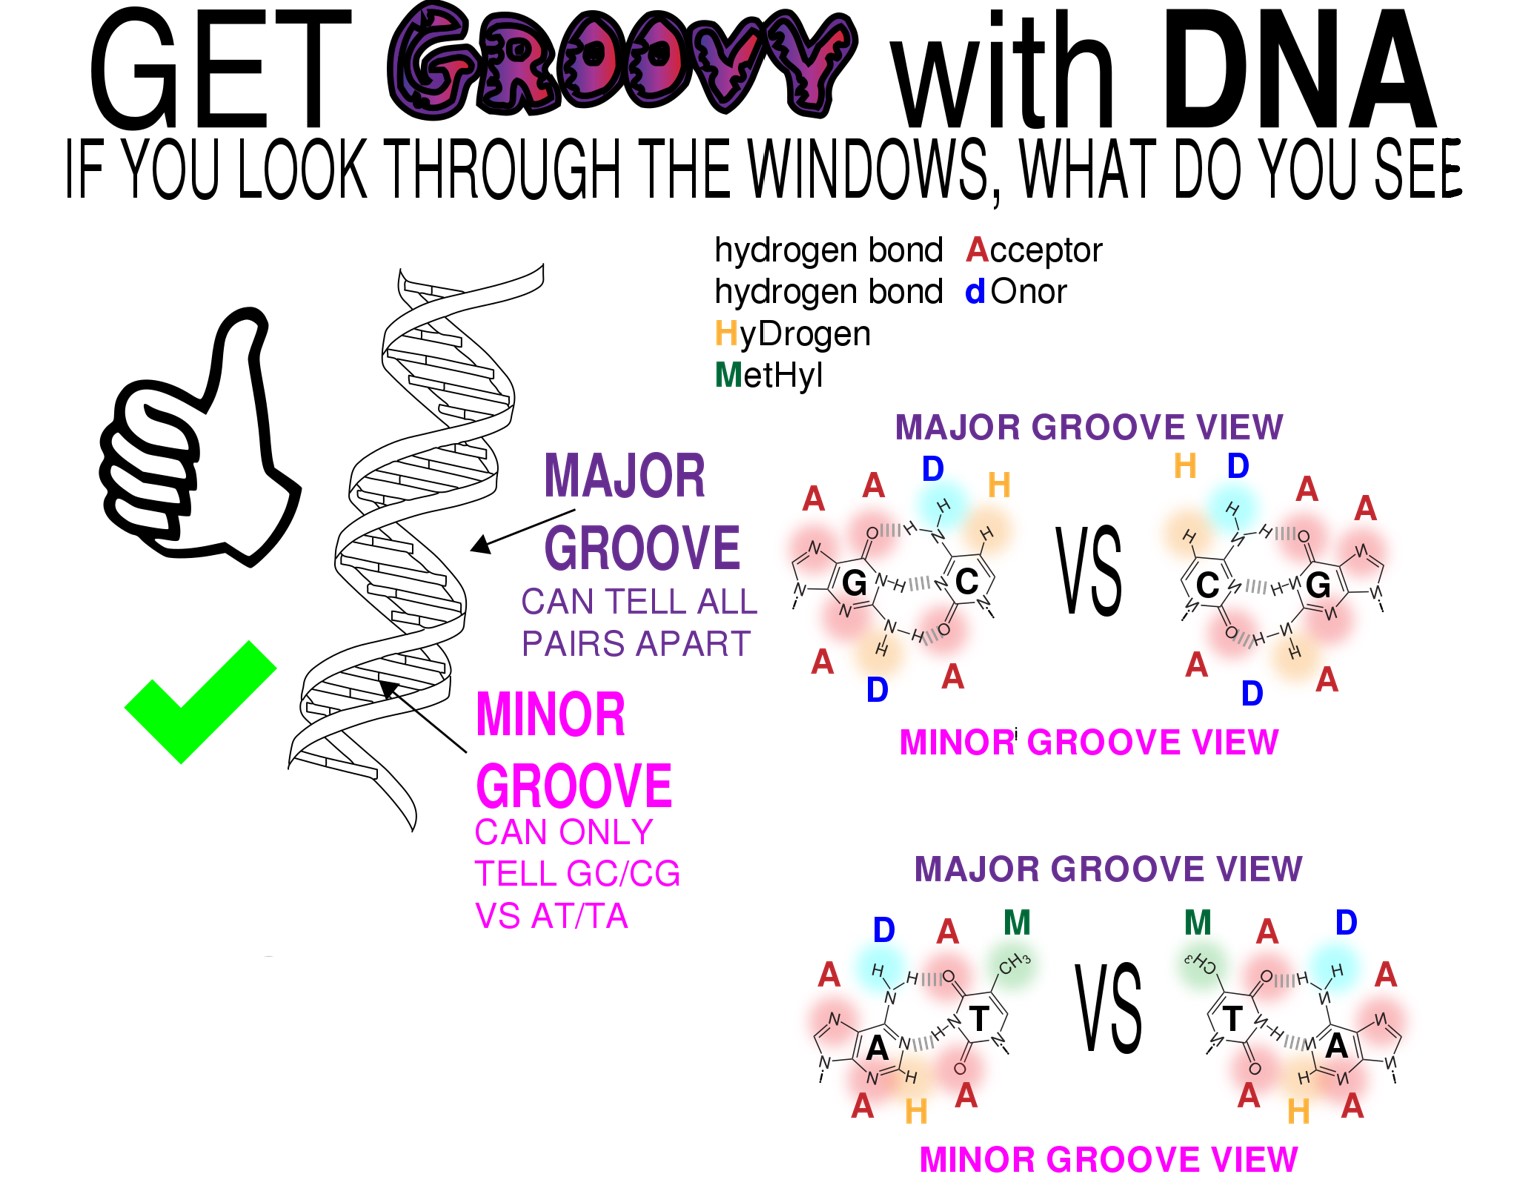 DNA groovy biochem life cropped.jpg